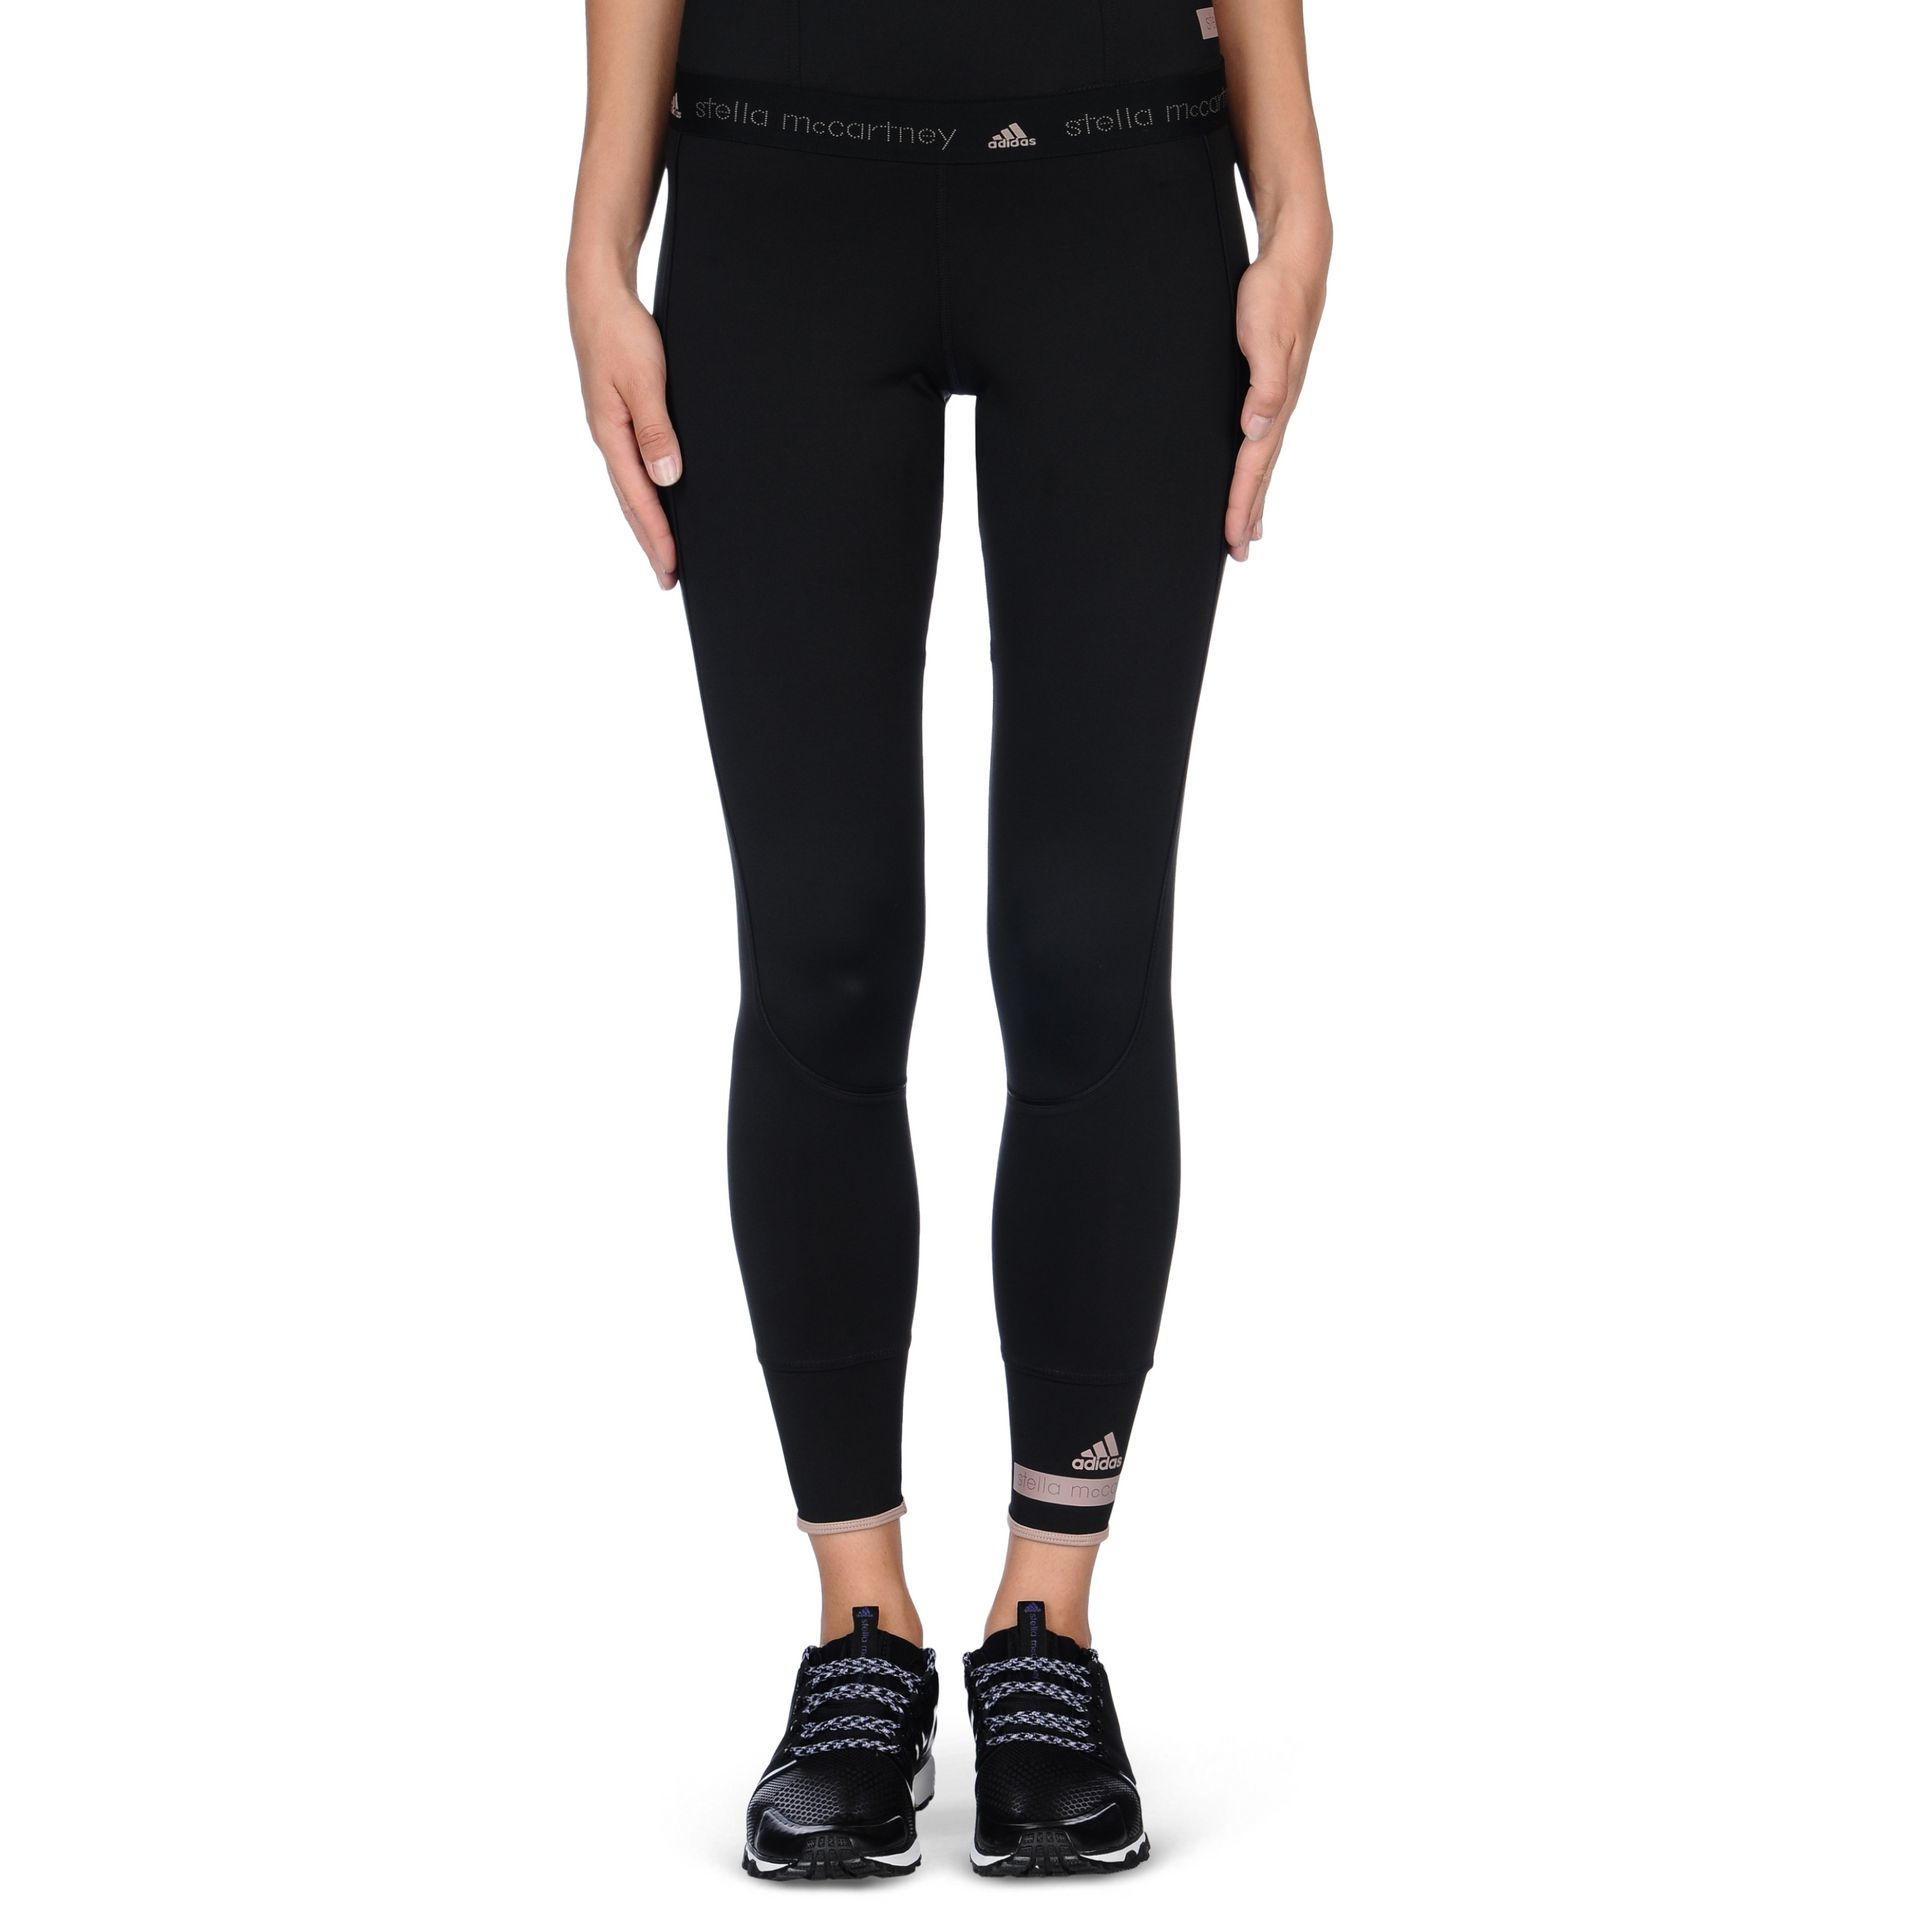 Lyst - Adidas By Stella Mccartney Black 7/8 Length Leggings in Black